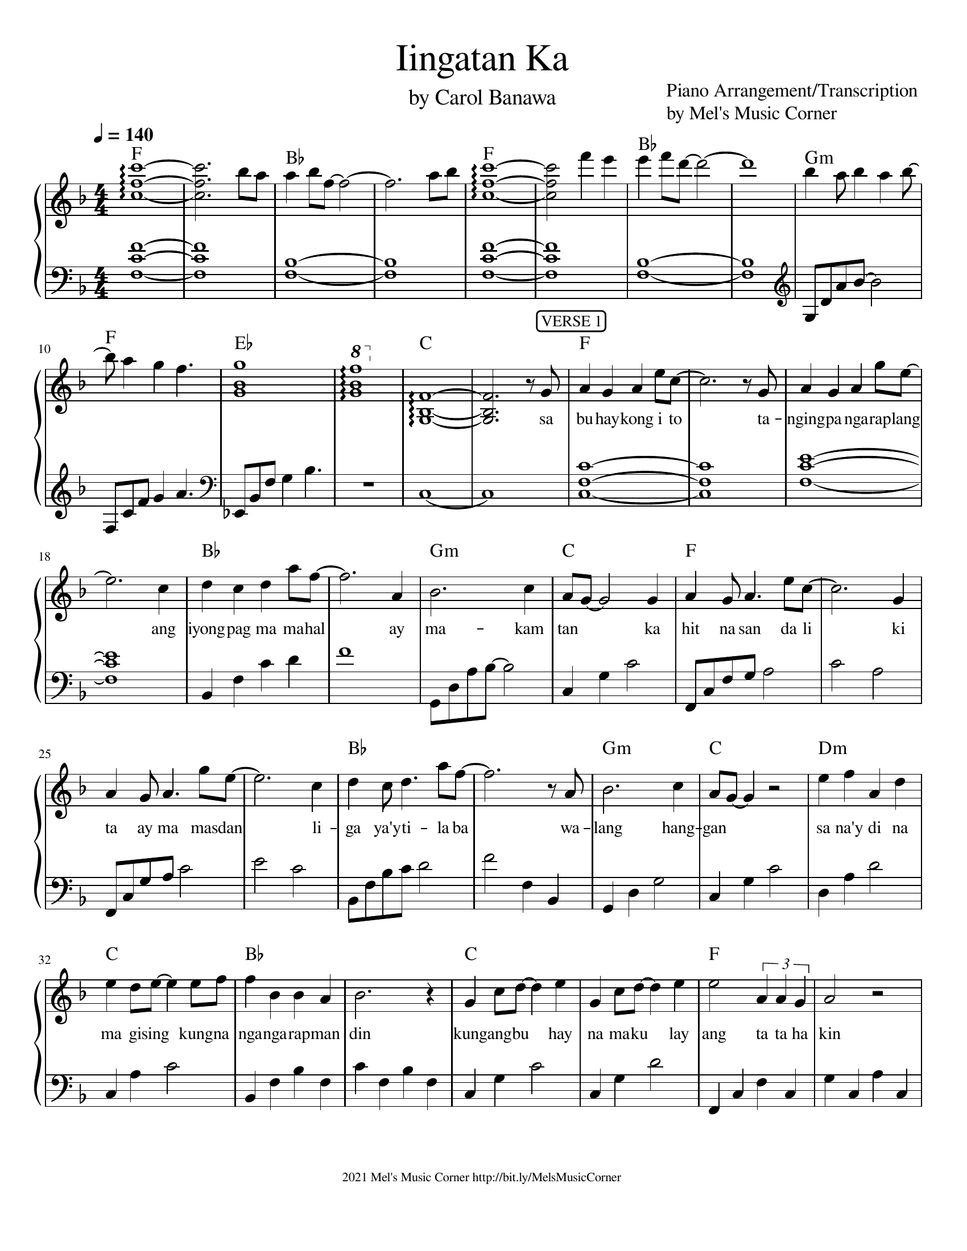 Carol Banawa - Iingatan Ka (piano sheet music) by Mel's Music Corner